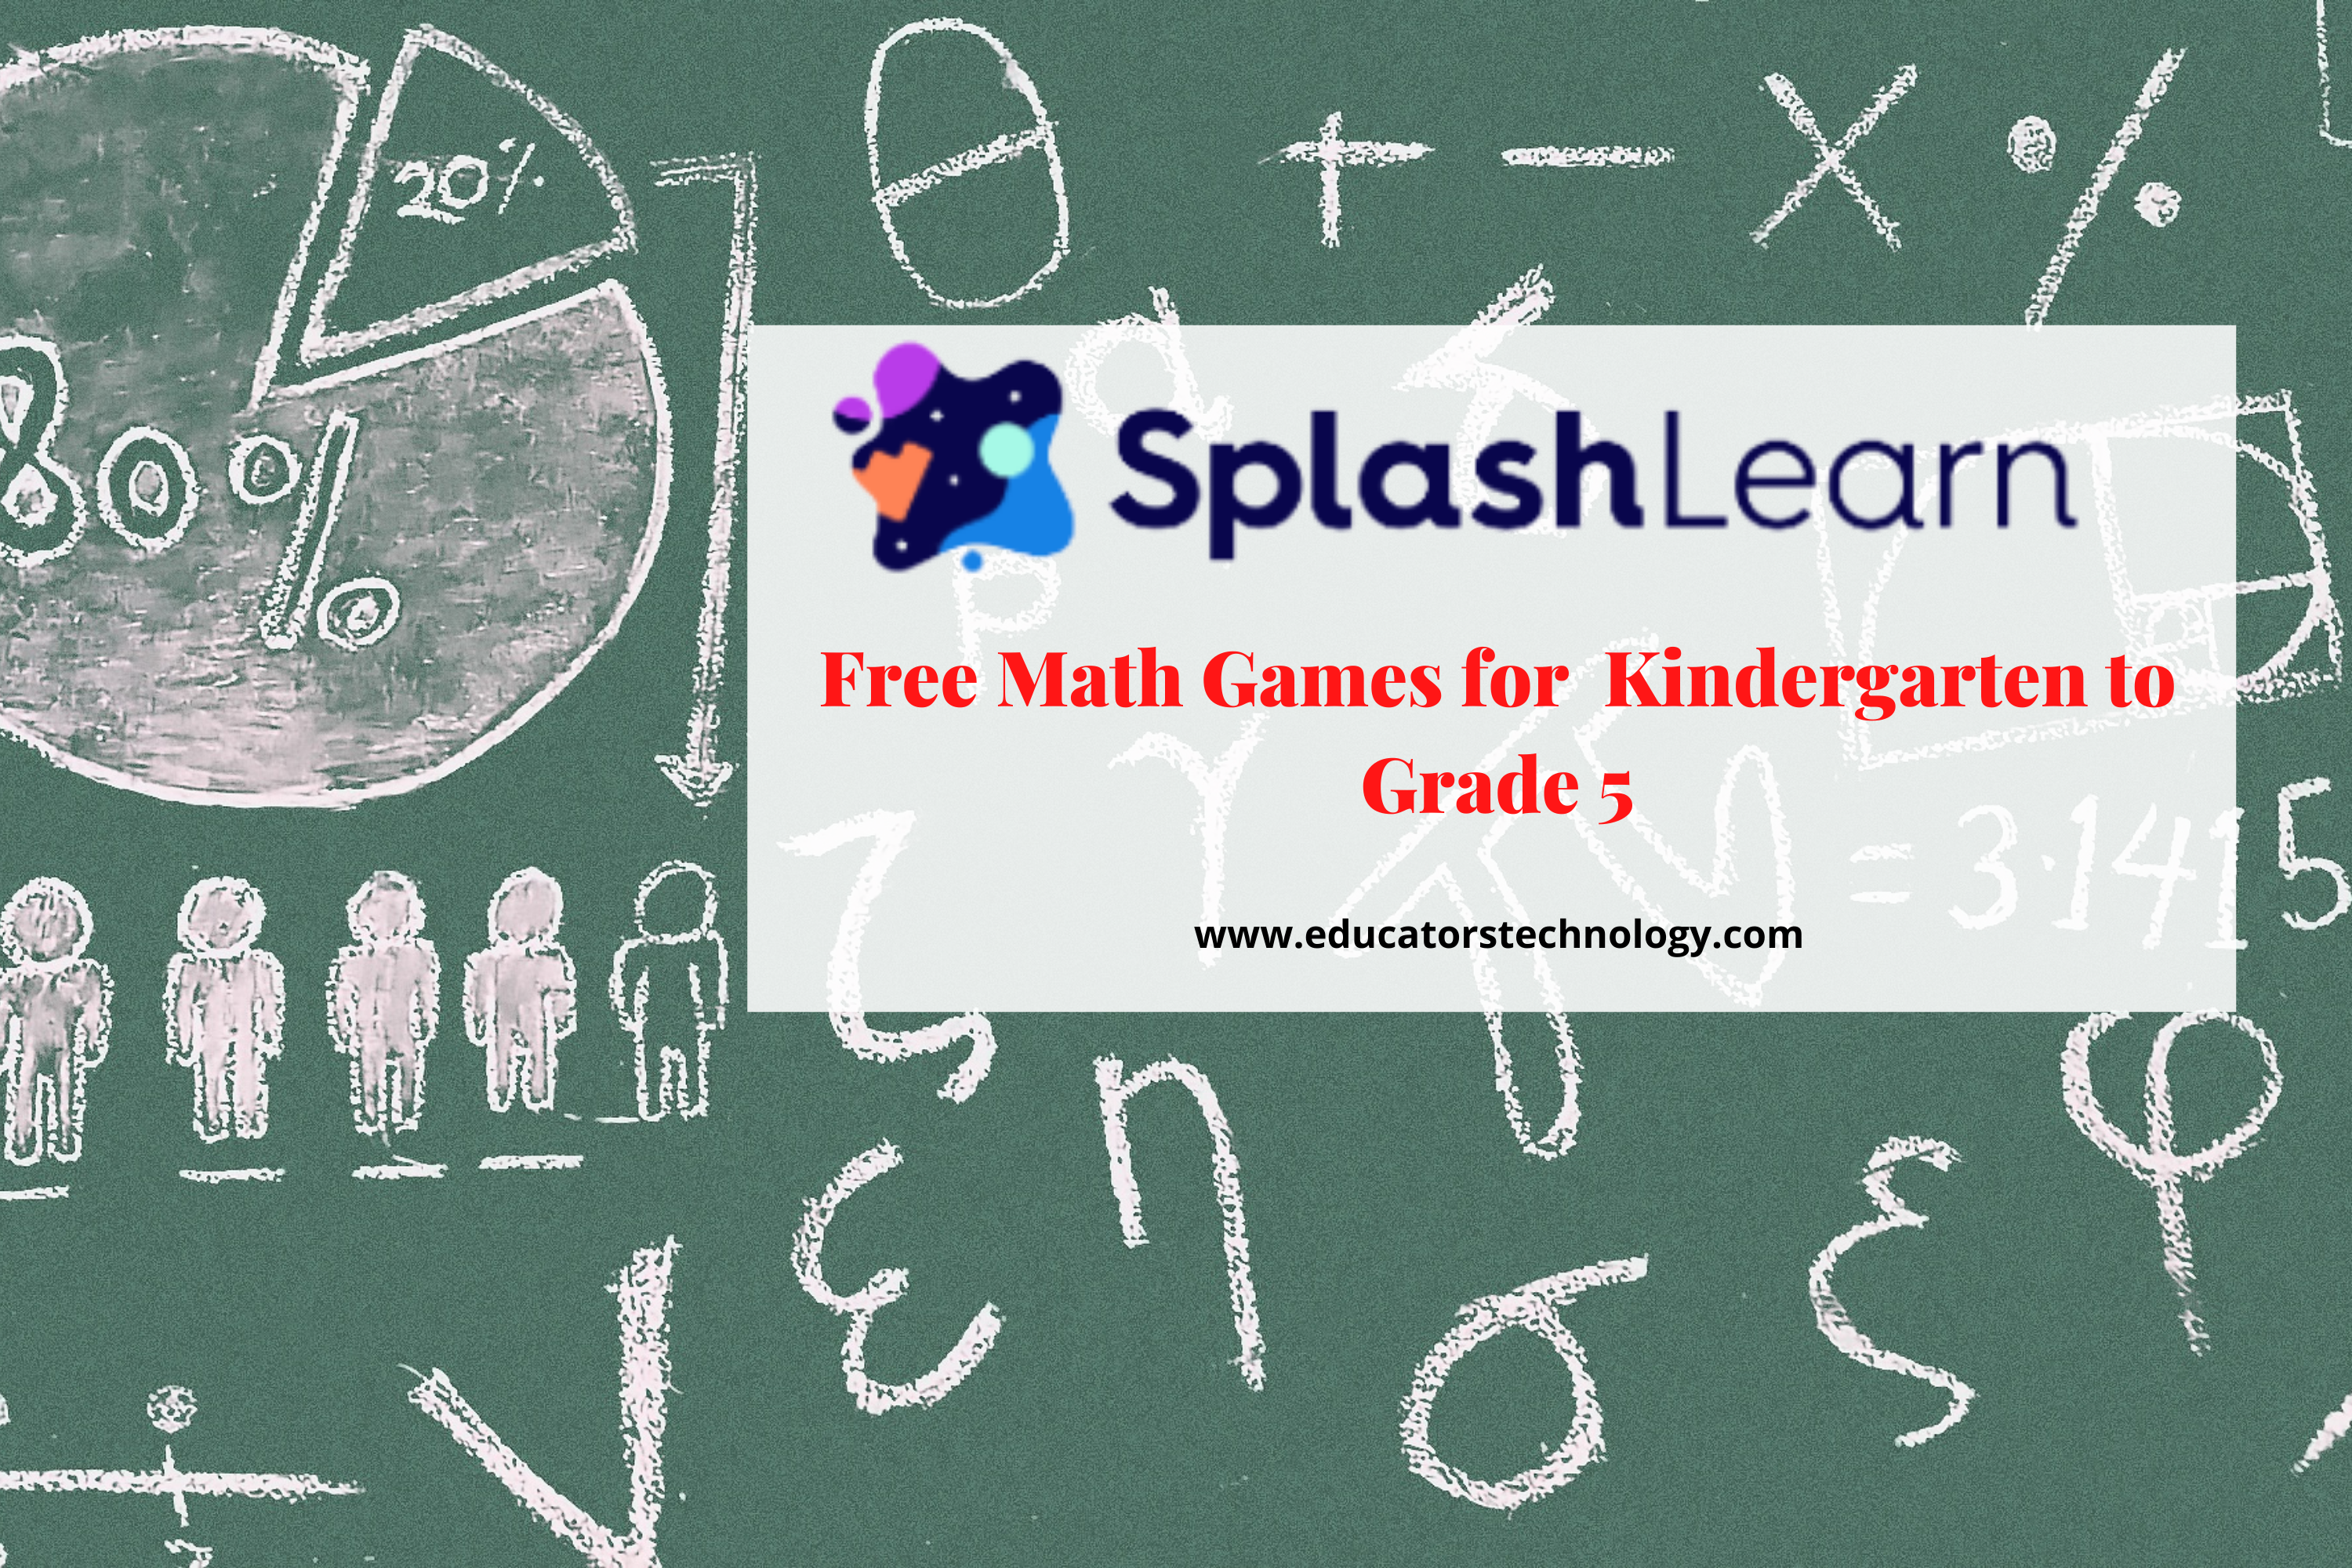 SplashLearn- Free Math Games for Kindergarten to Grade 5